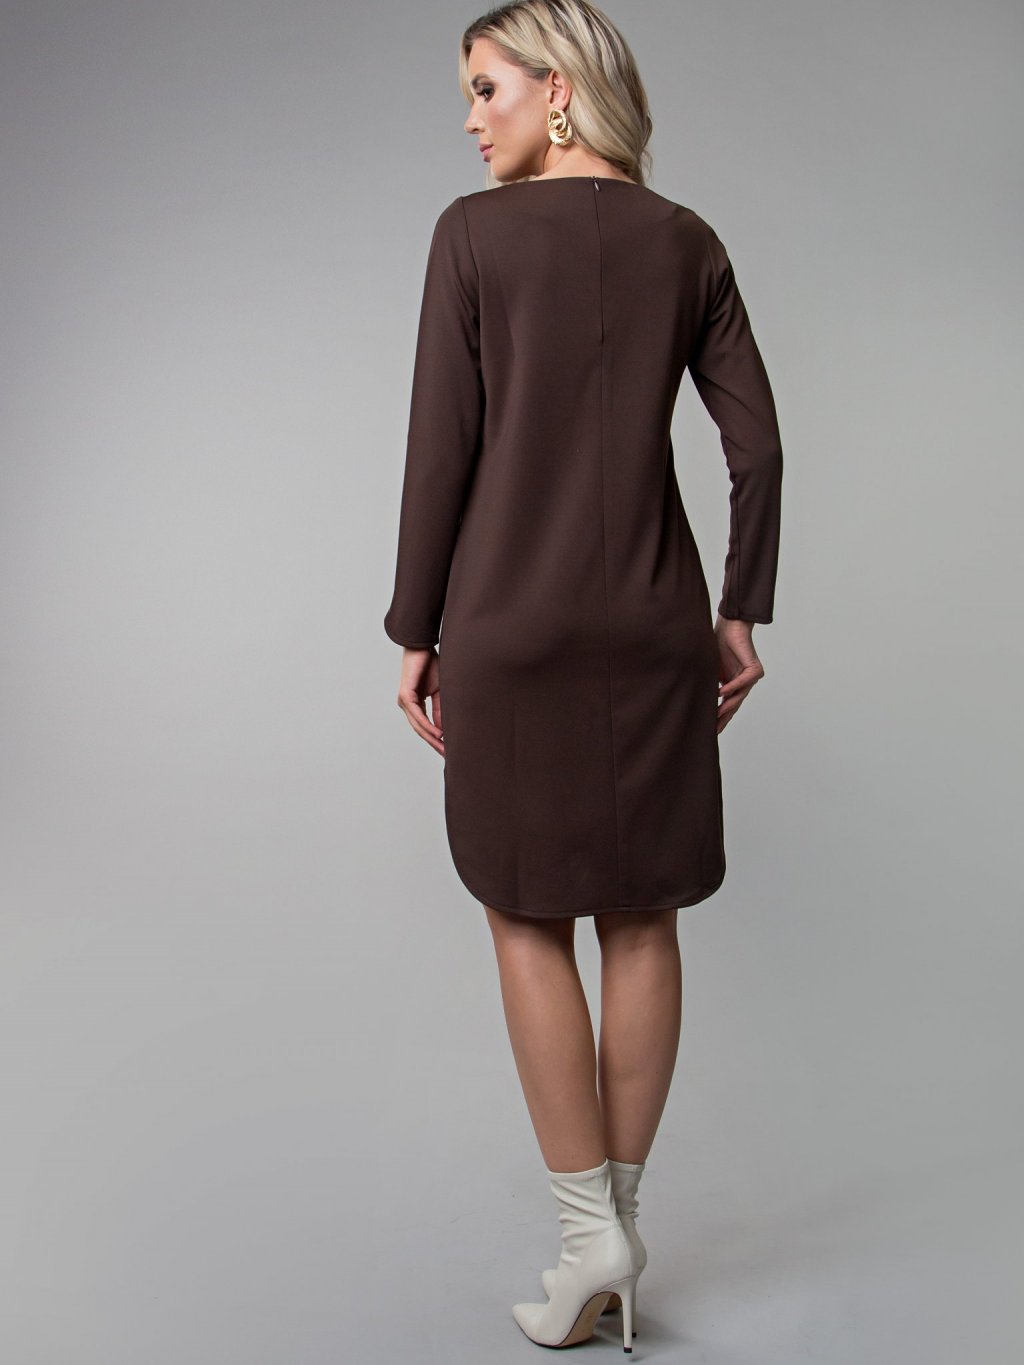 Платье Орнелла трикотаж шоколад (П-196-2) - 3